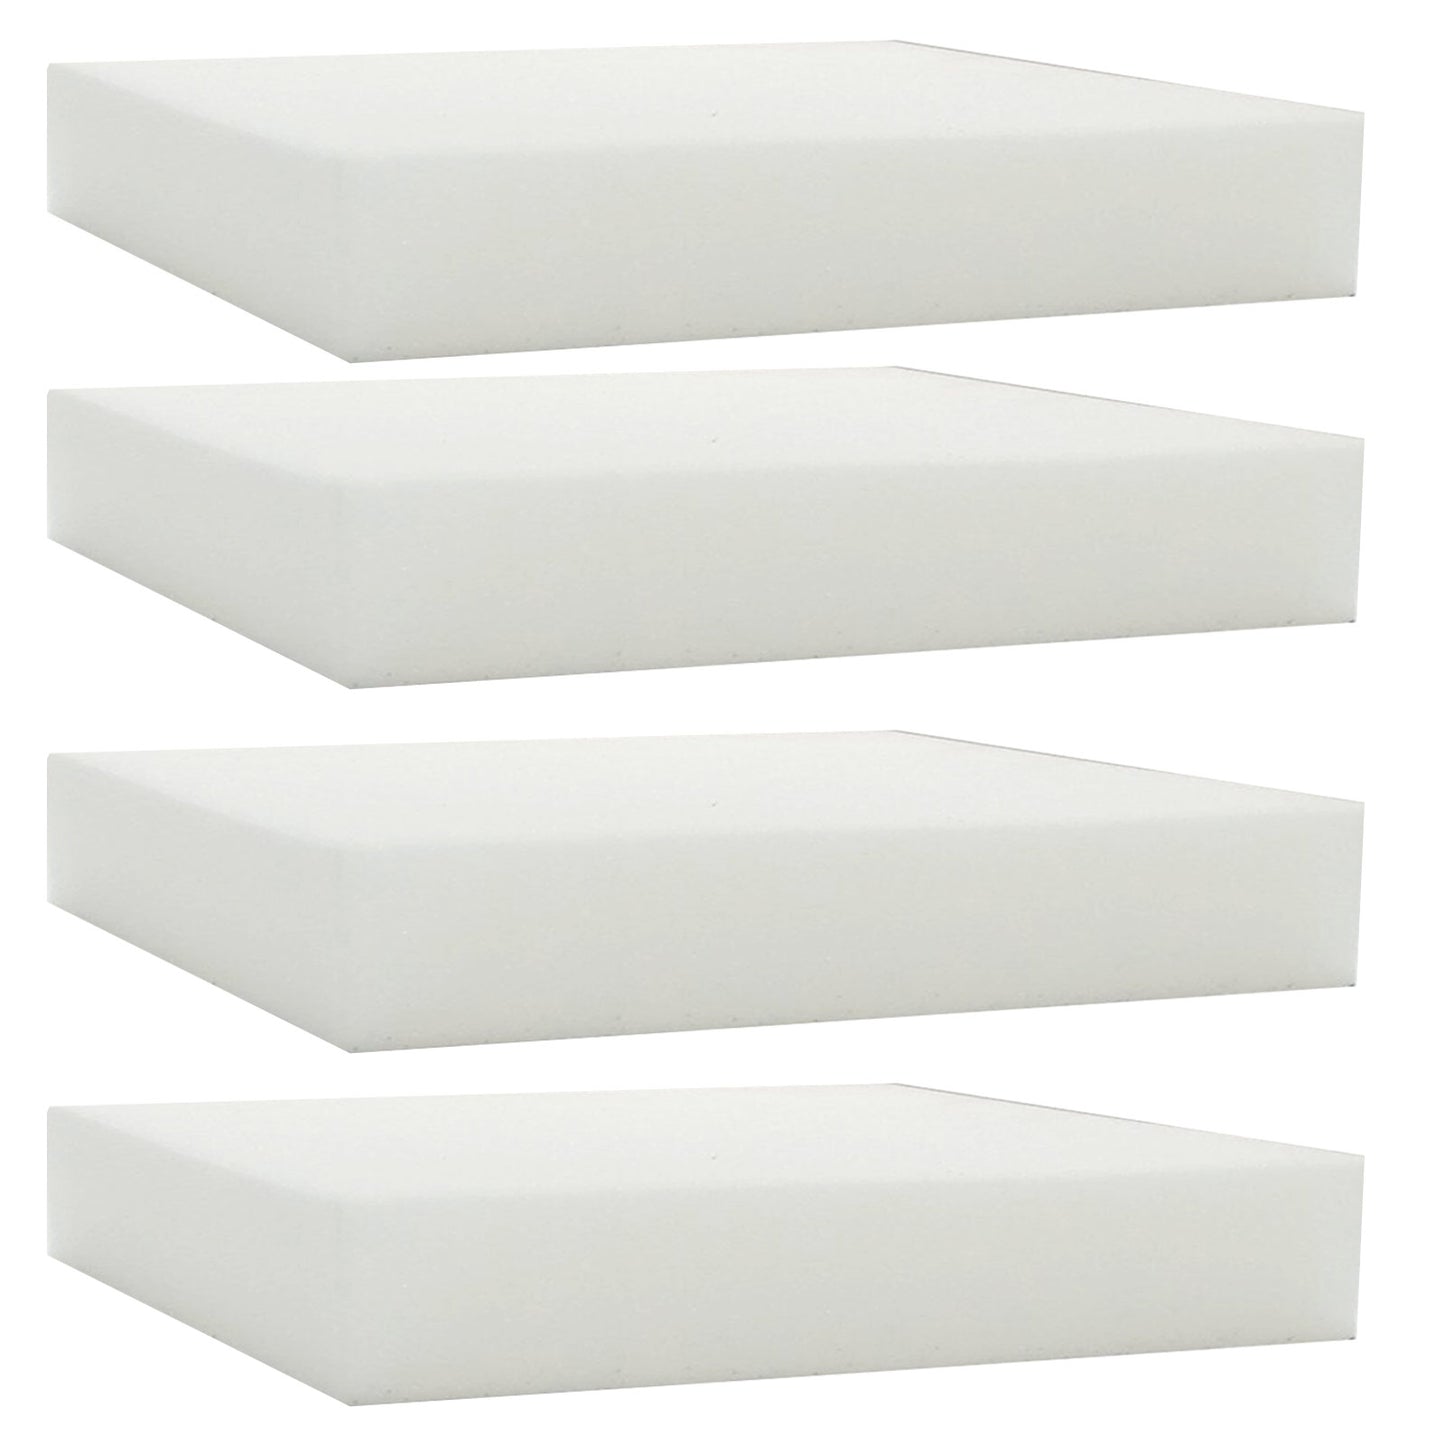 Mybecca 2" x 24" x 72" High Density Upholstery Foam Cushion (Seat Replacement, Upholstery Sheet, Foam Padding)